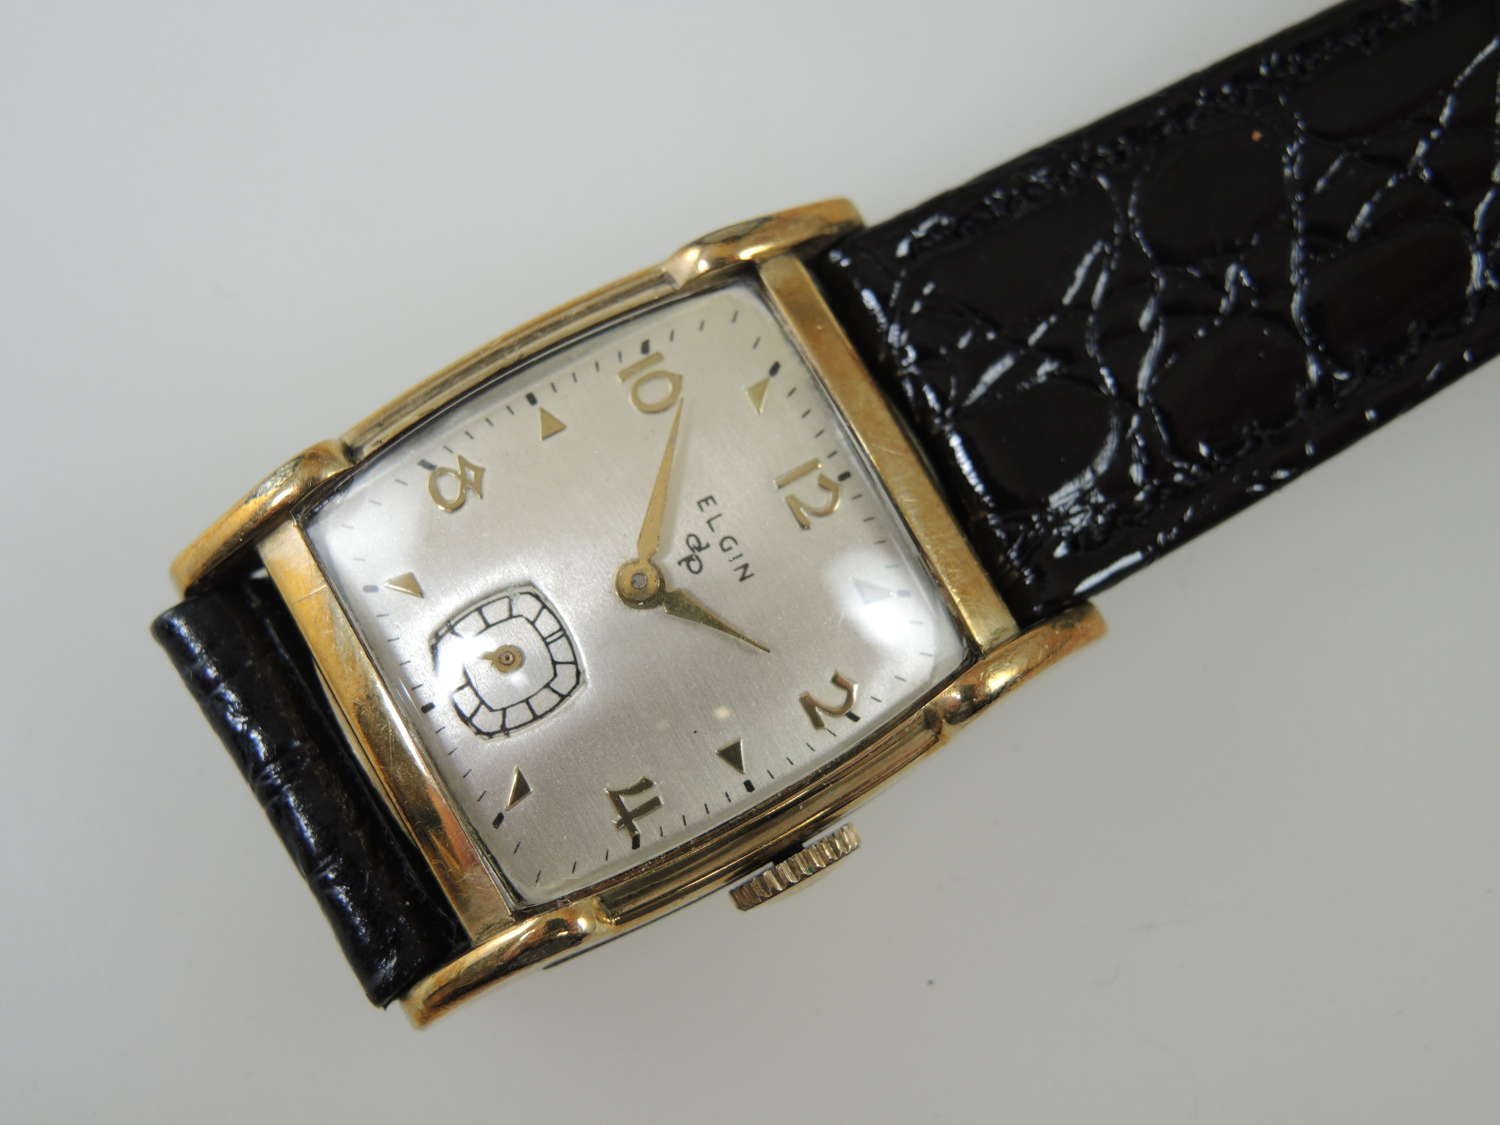 Stylish 17 Jewel Elgin Wrist Watch c1950